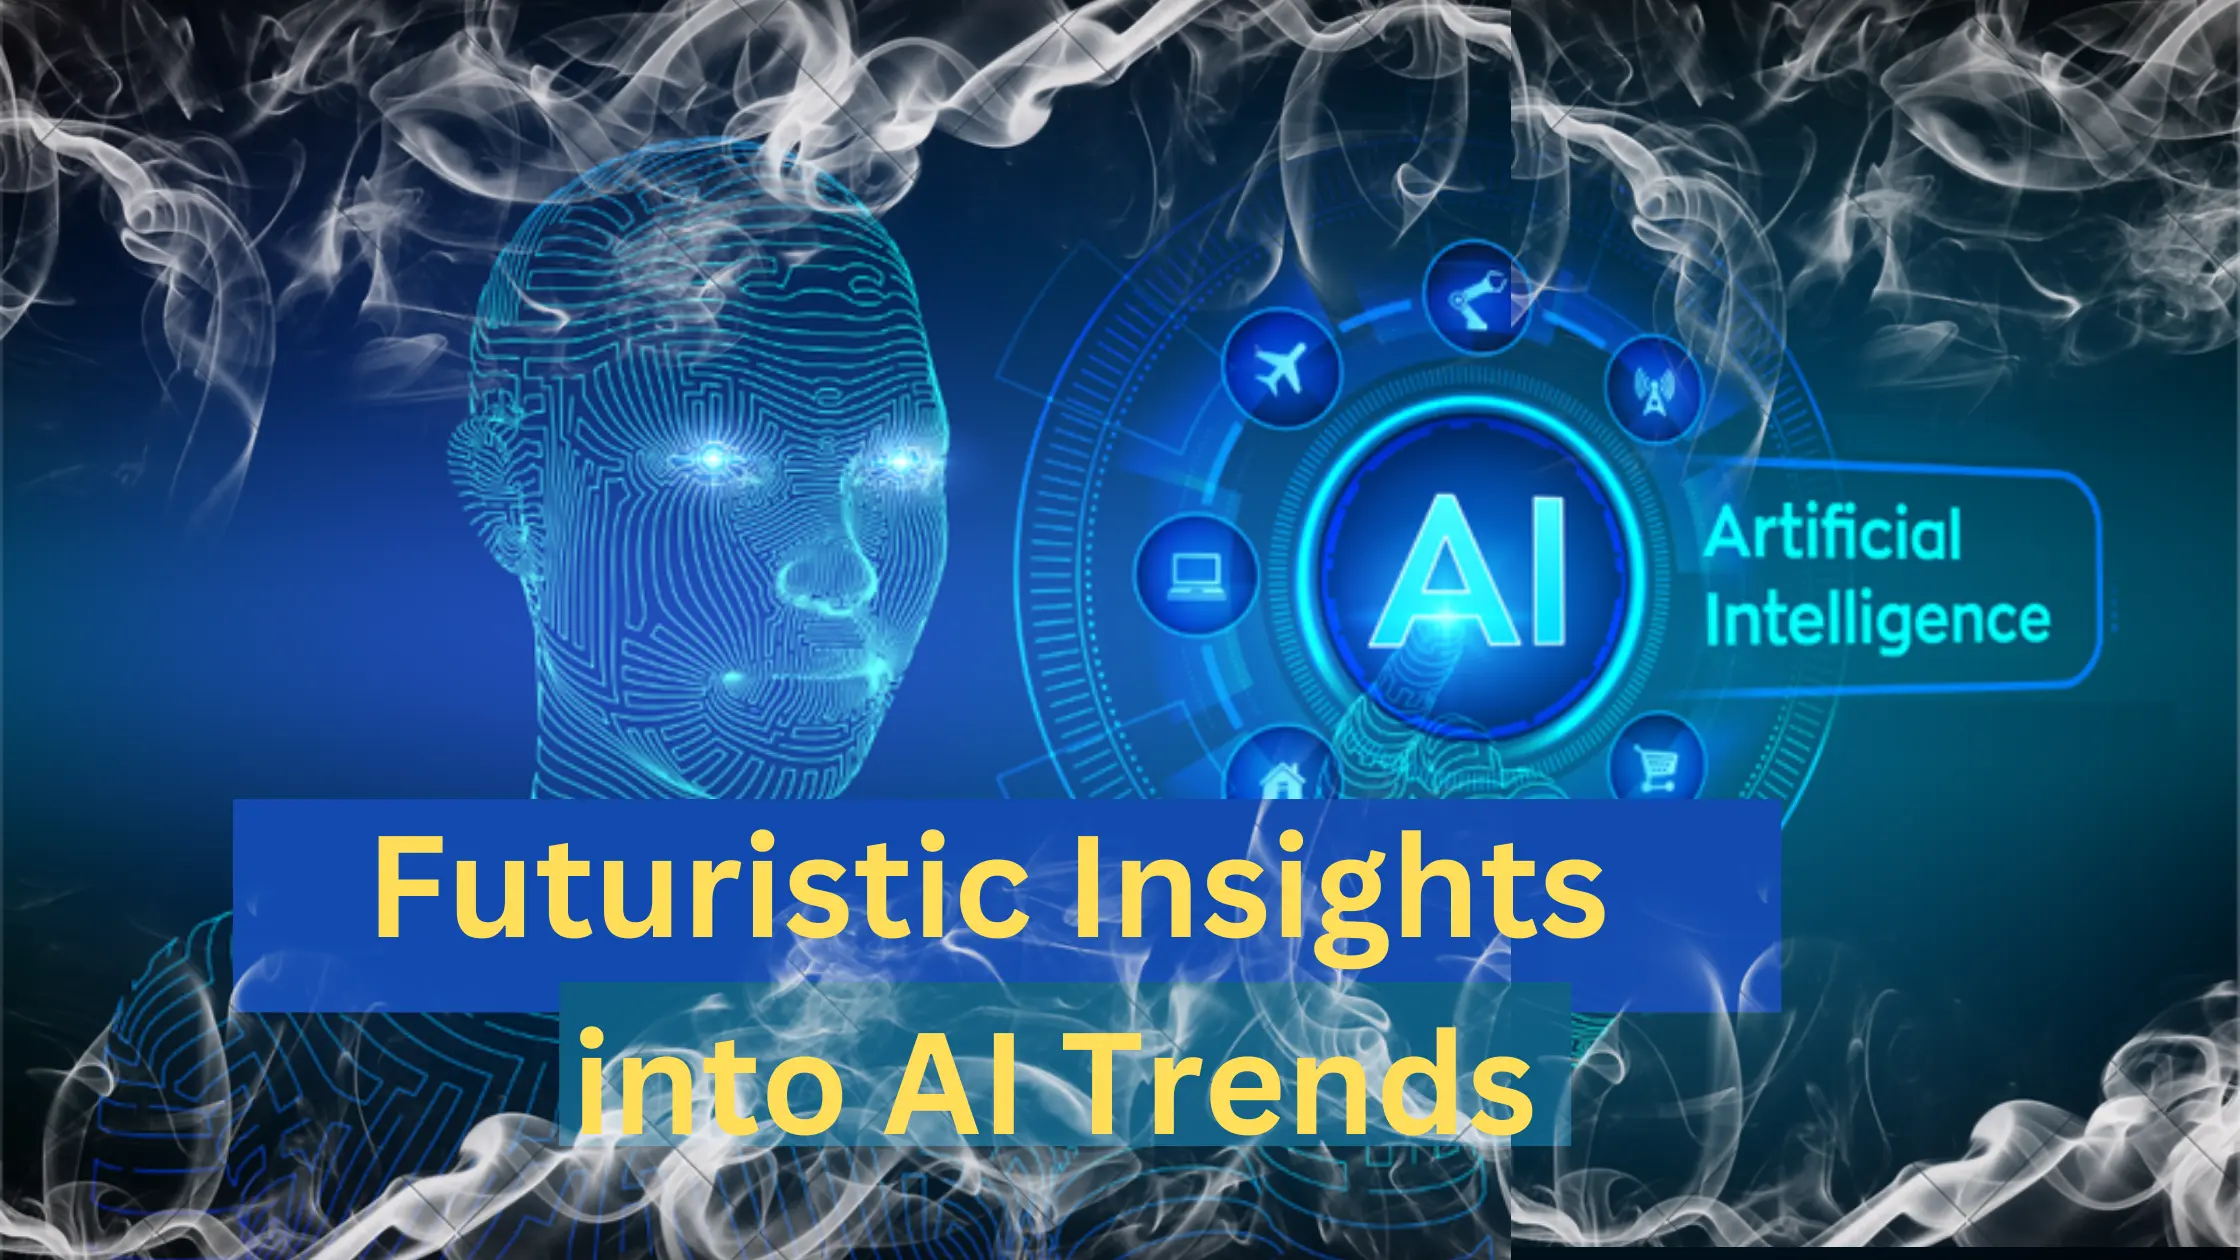 Futuristic insights into AI trends shaping tomorrow’s data science landscape.